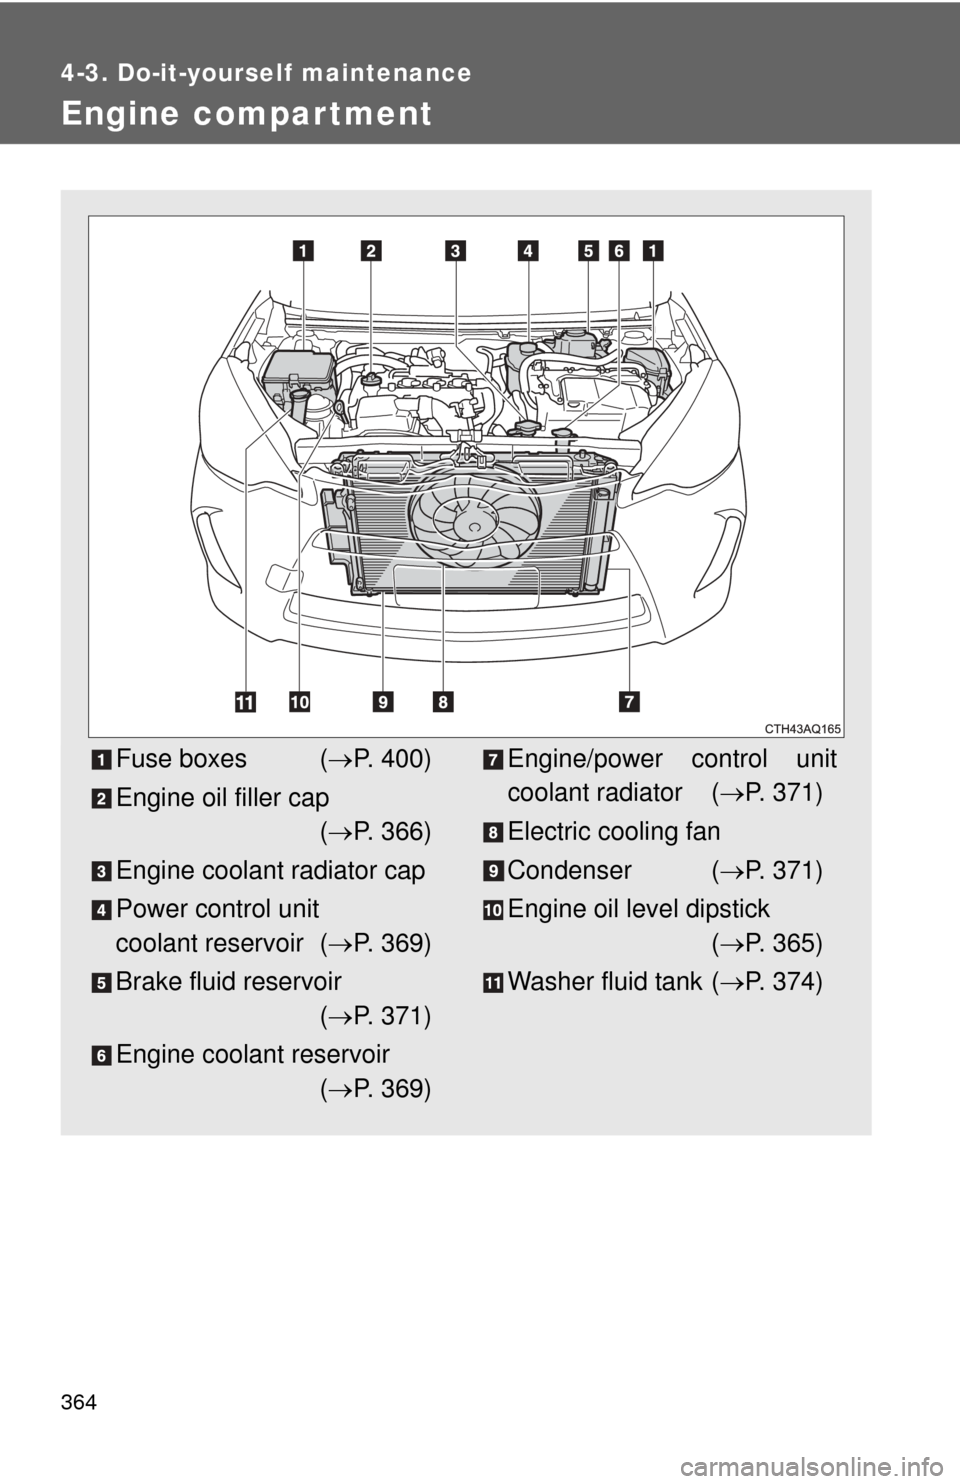 TOYOTA PRIUS C 2012 NHP10 / 1.G Owners Manual 364
4-3. Do-it-yourself maintenance
Engine compar tment
Fuse boxes (P. 400)
Engine oil filler cap ( P. 366)
Engine coolant radiator cap
Power control unit 
coolant reservoir ( P. 369)
Brake f